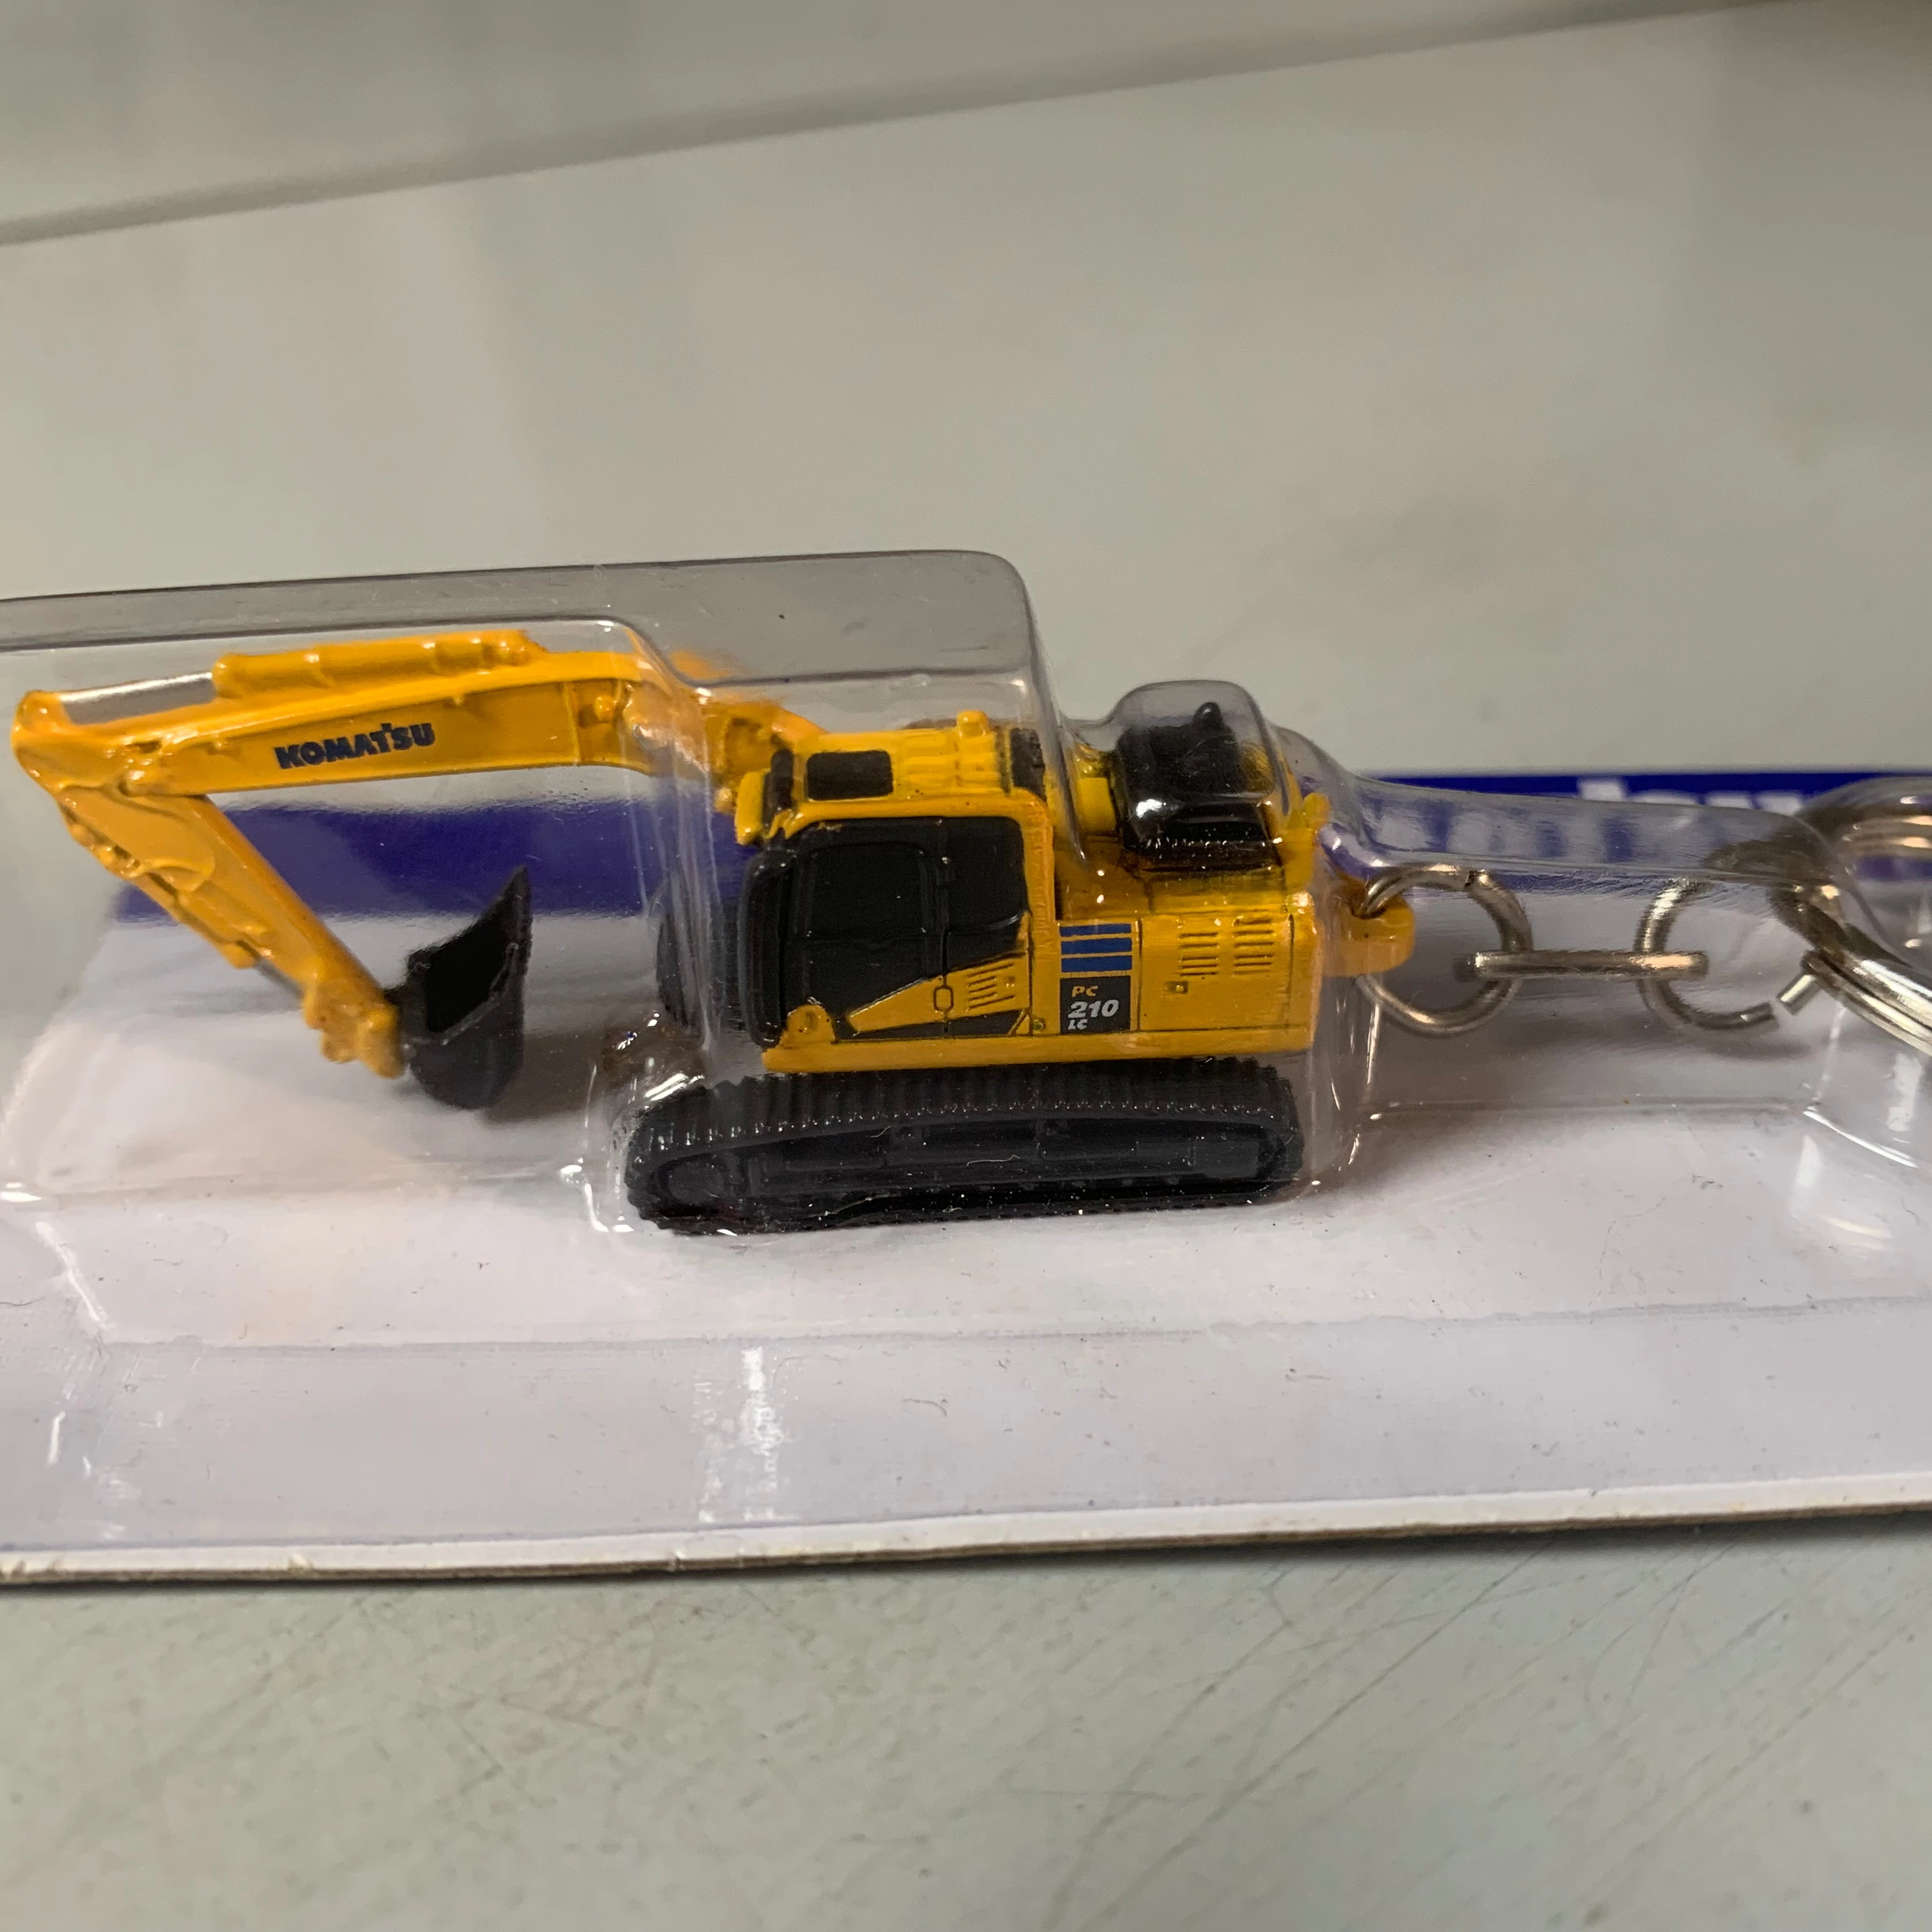 Wholesale Bagger Modell Schlüssel bund Schlüssel ring Schlüssel